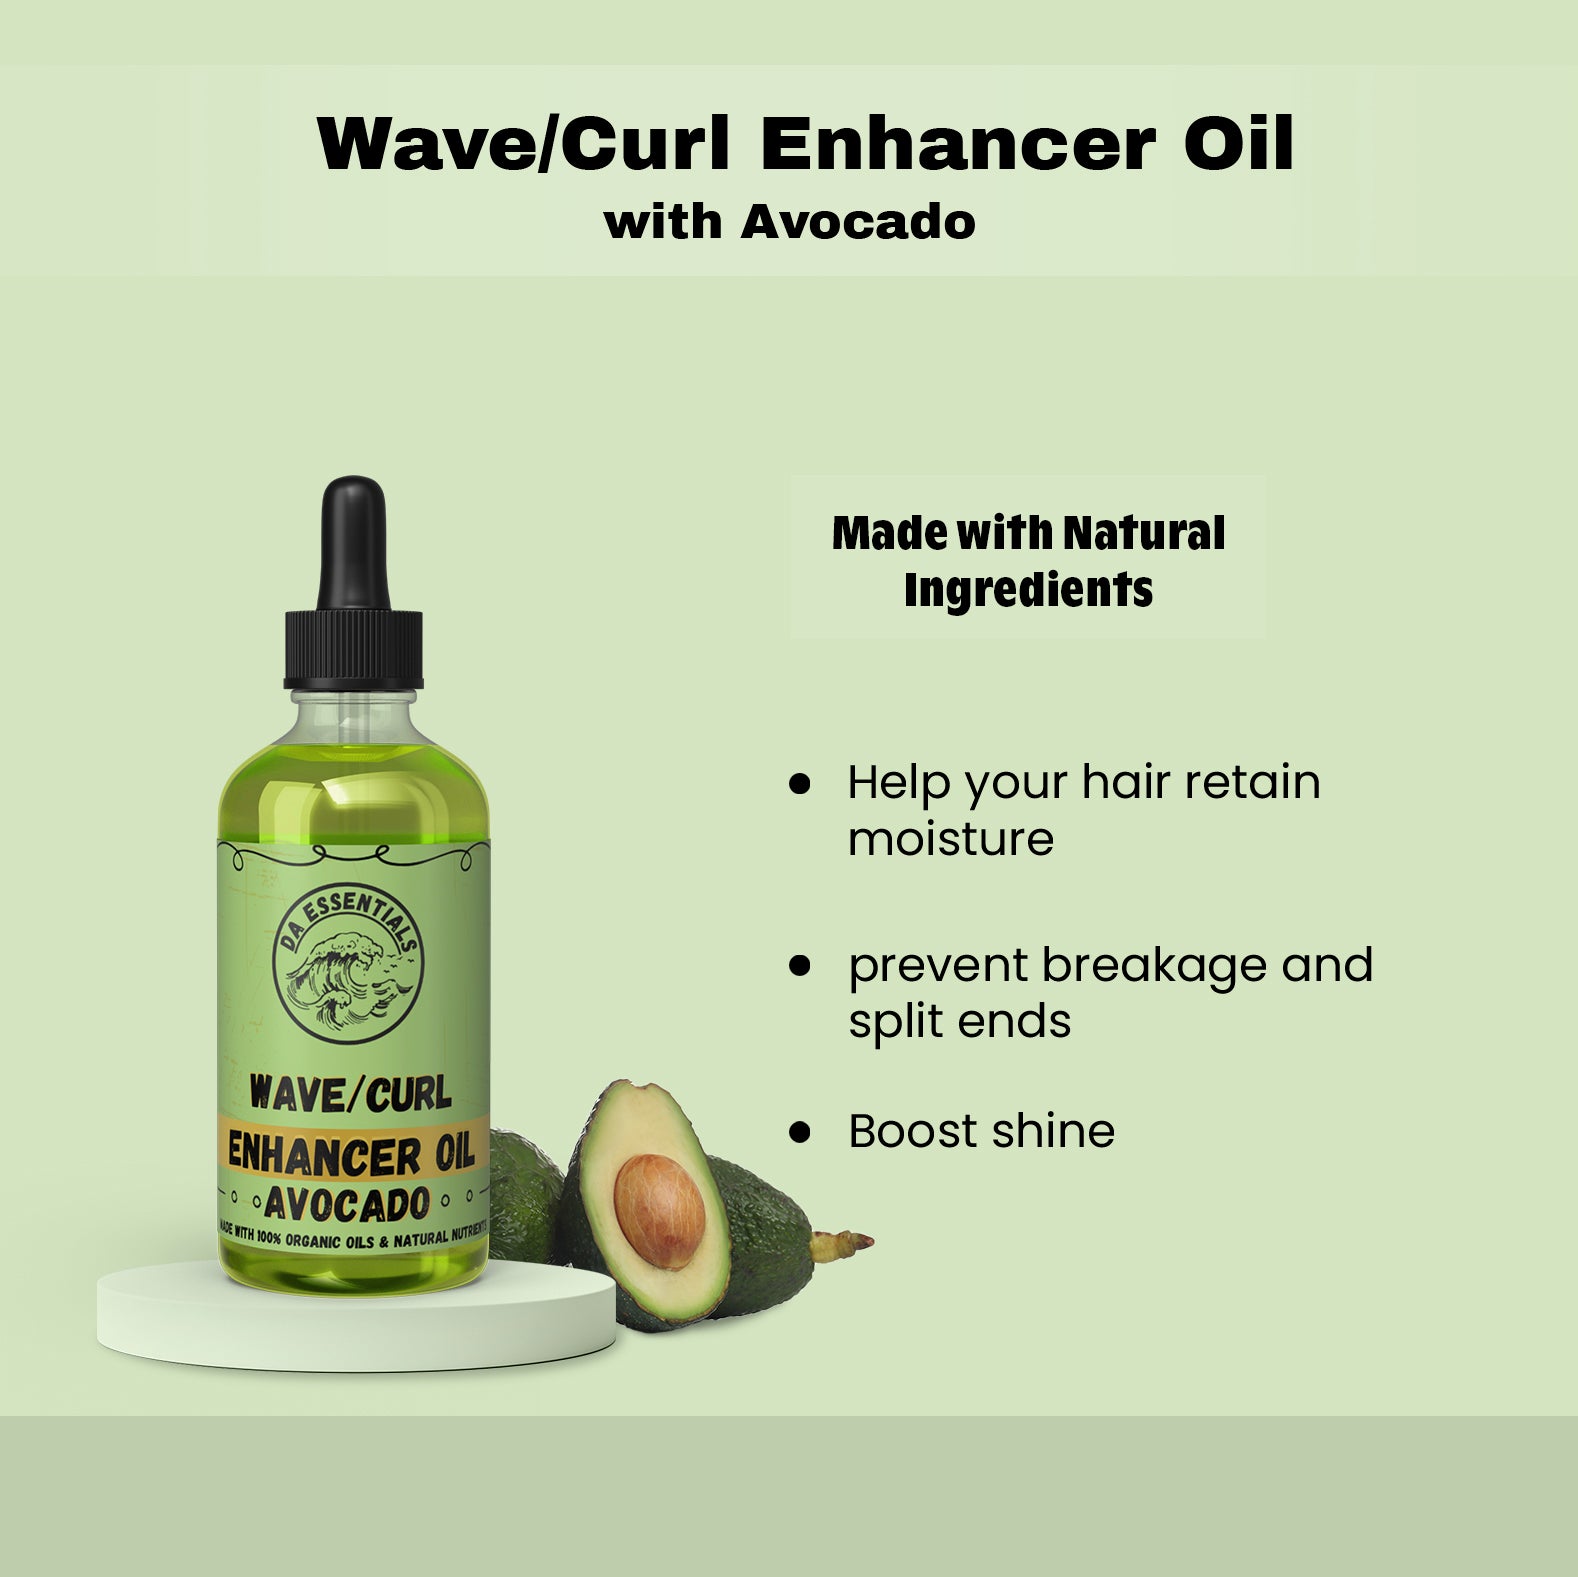 360 Wave/Curl Enhancement Avocado Oil